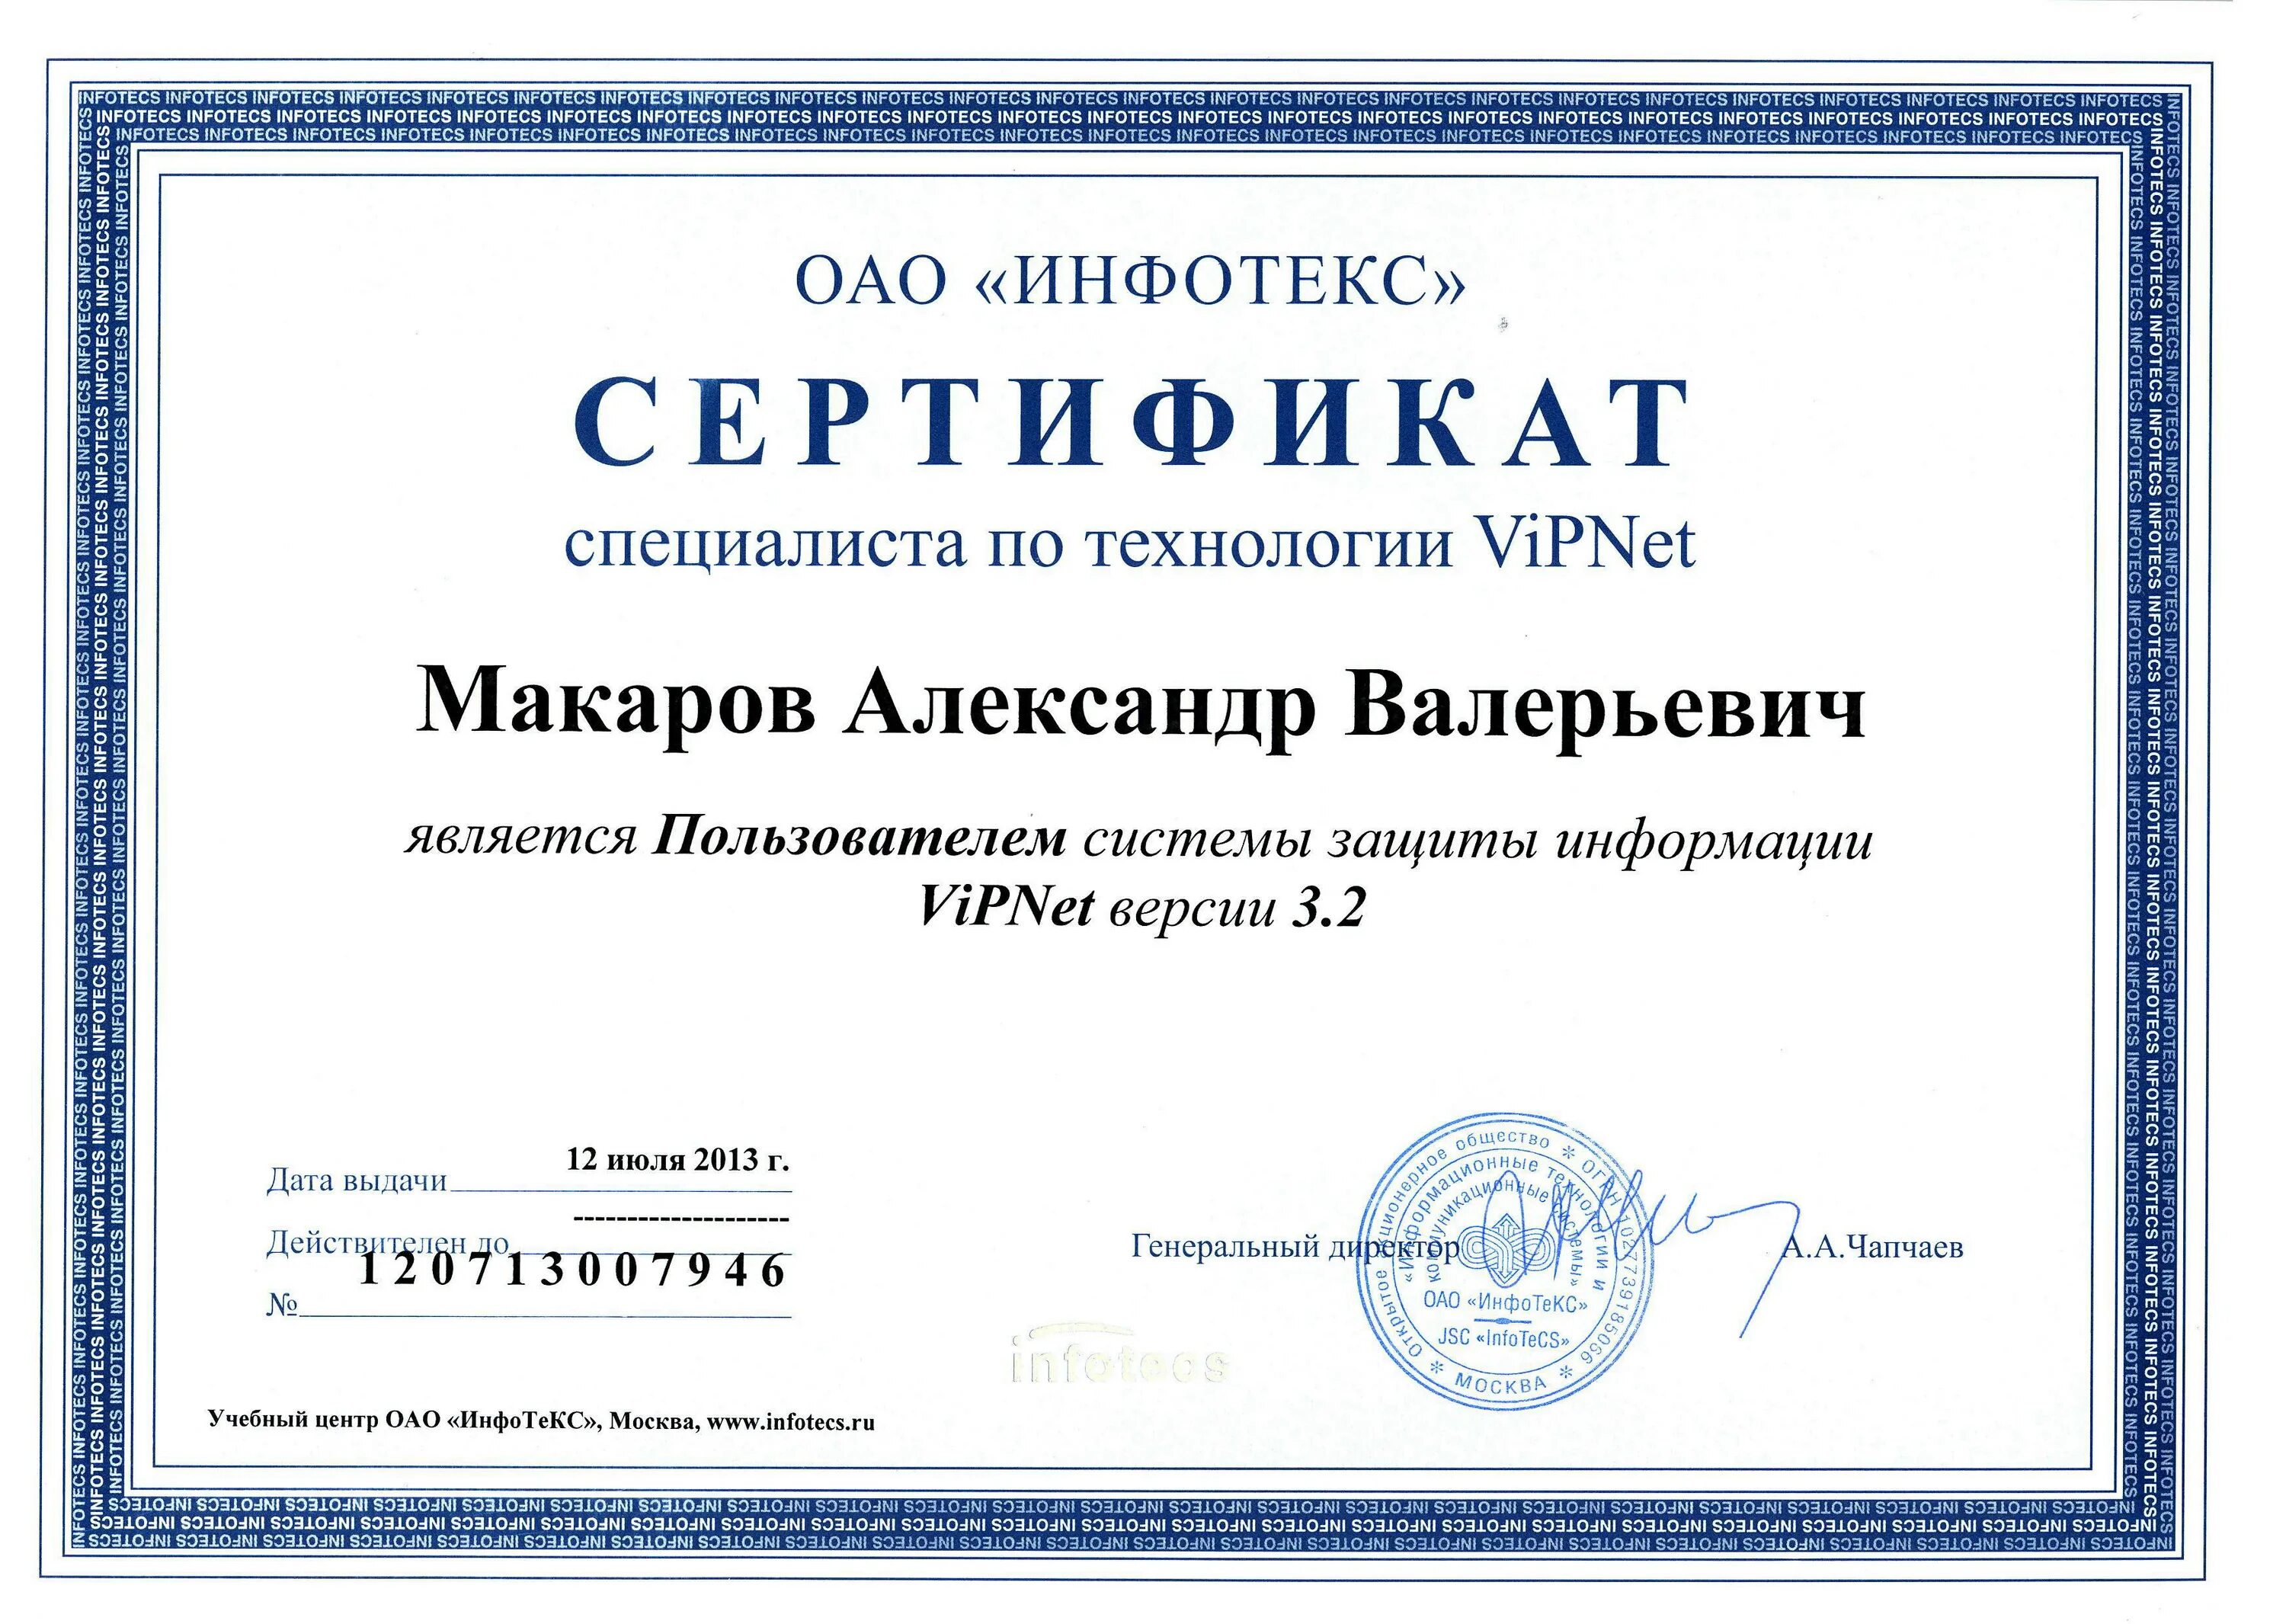 Vipnet client сертификат. Сертификат VIPNET. Сертификат по информационной безопасности. Сертификат специалиста VIPNET. Международные сертификаты информационной безопасности.